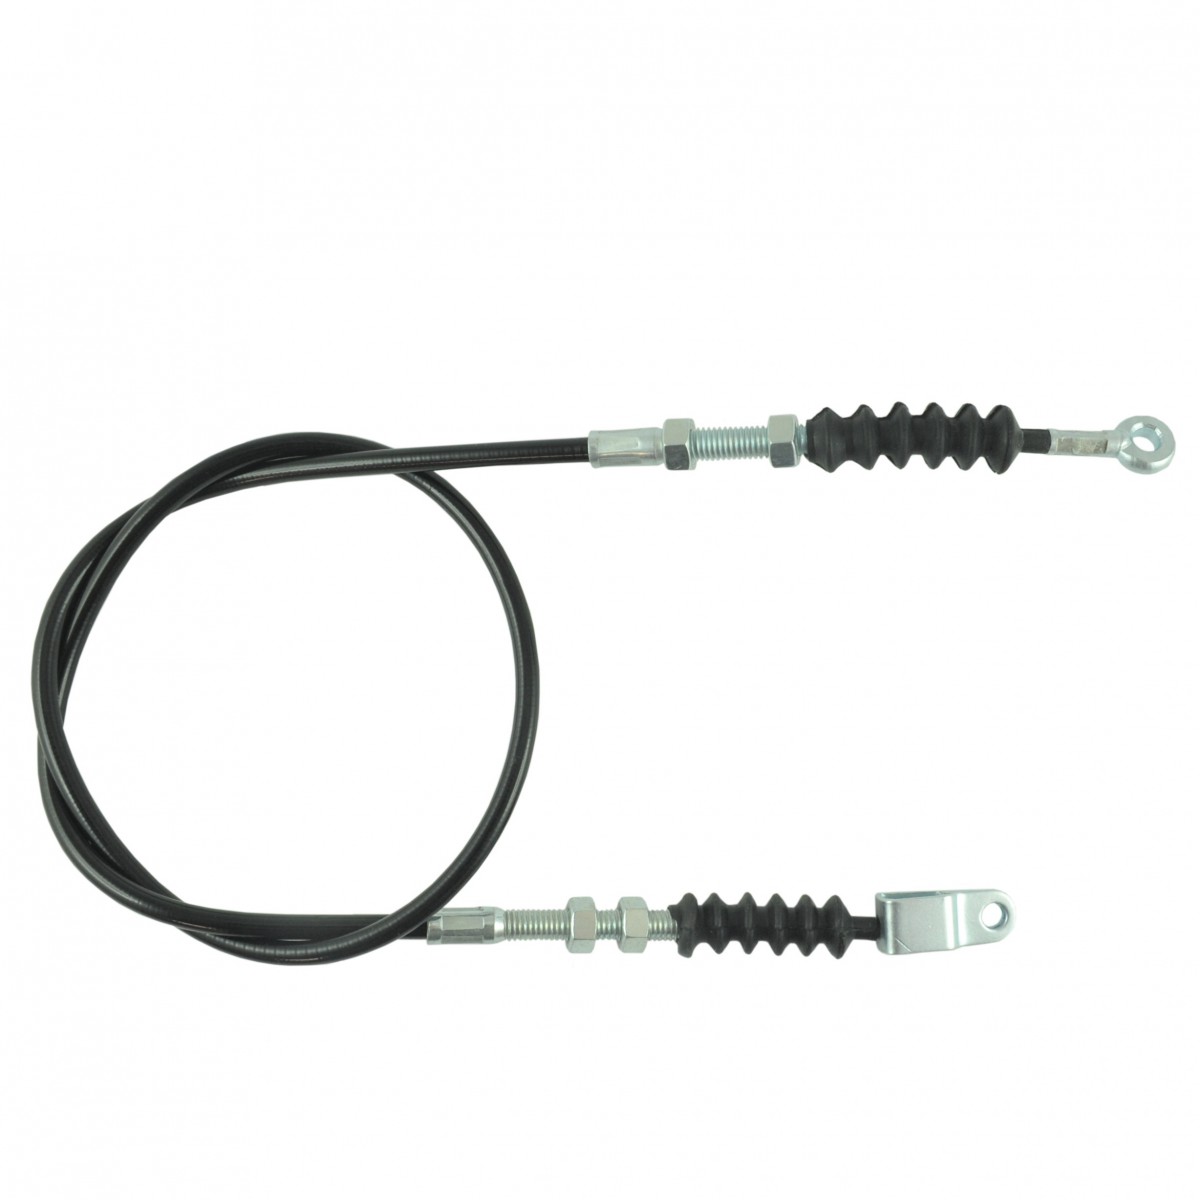 Cable embrague eje TDF 930 mm, Kubota M8540, M9540